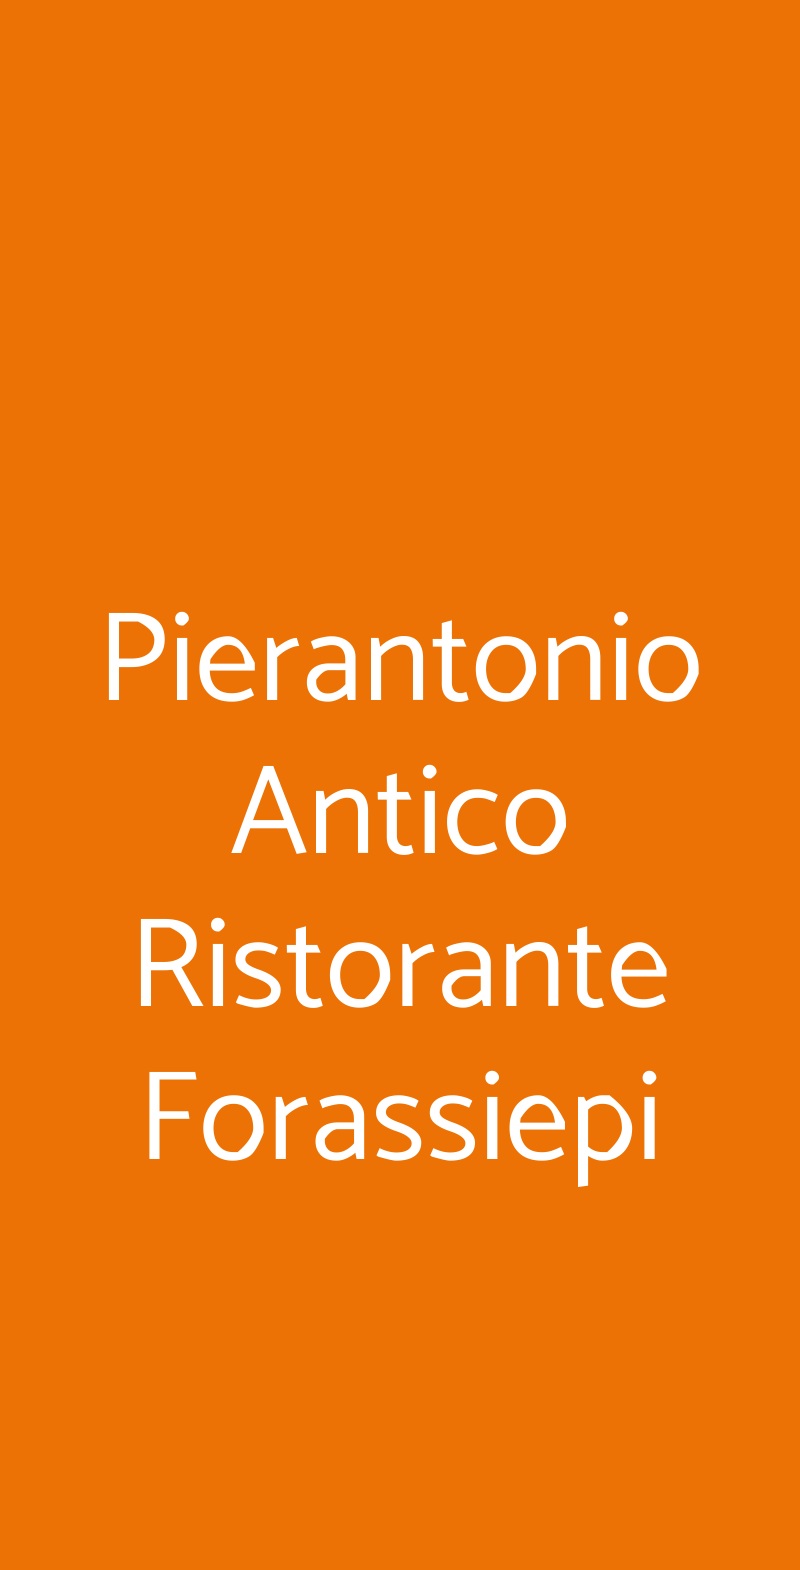 Pierantonio Antico Ristorante Forassiepi Montecarlo menù 1 pagina